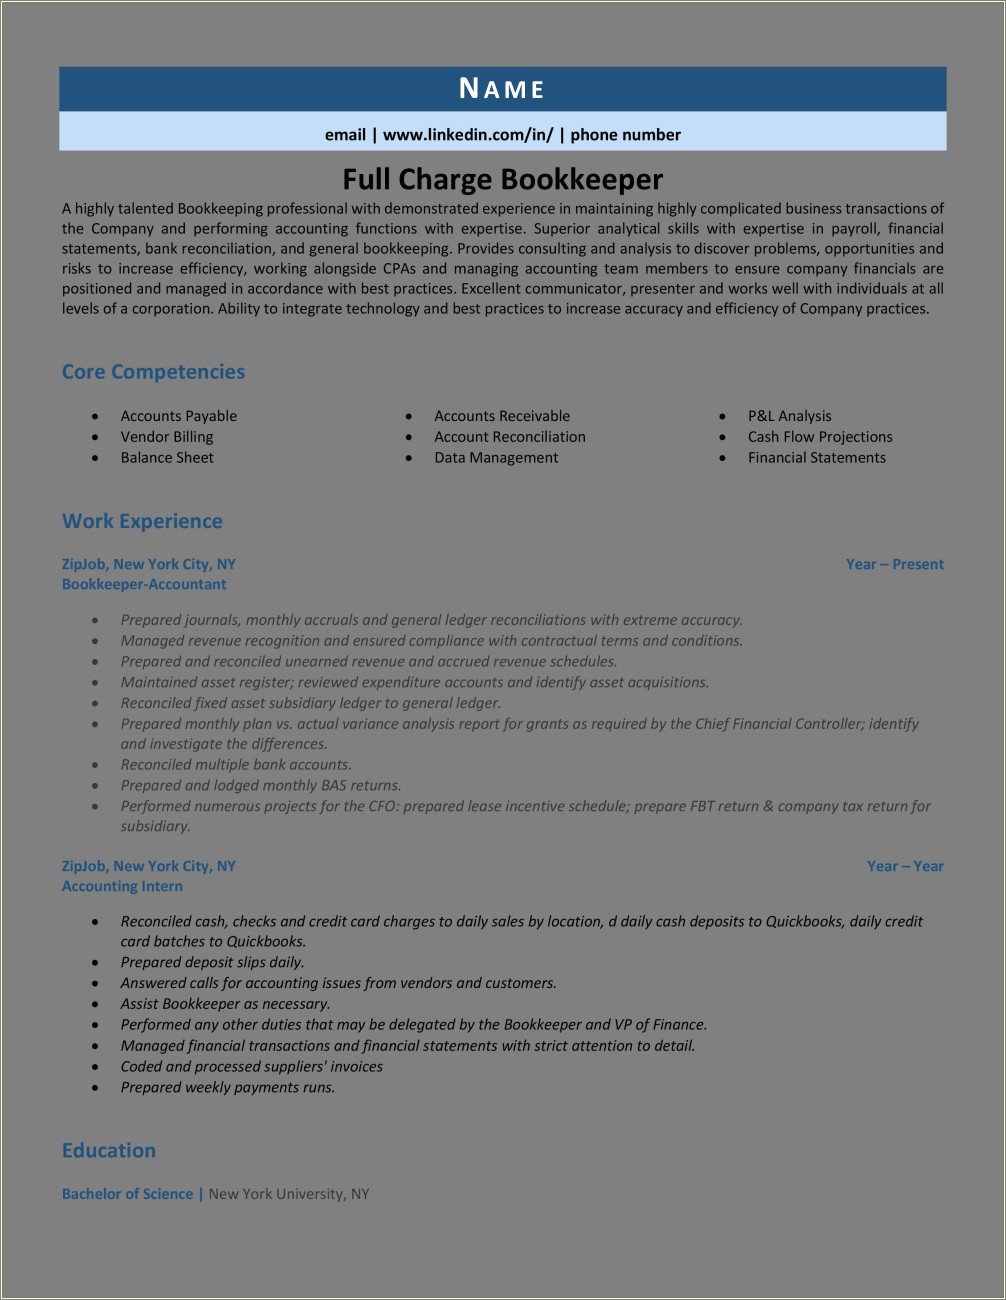 Full Charge Bookkeeper Job Description For Resume